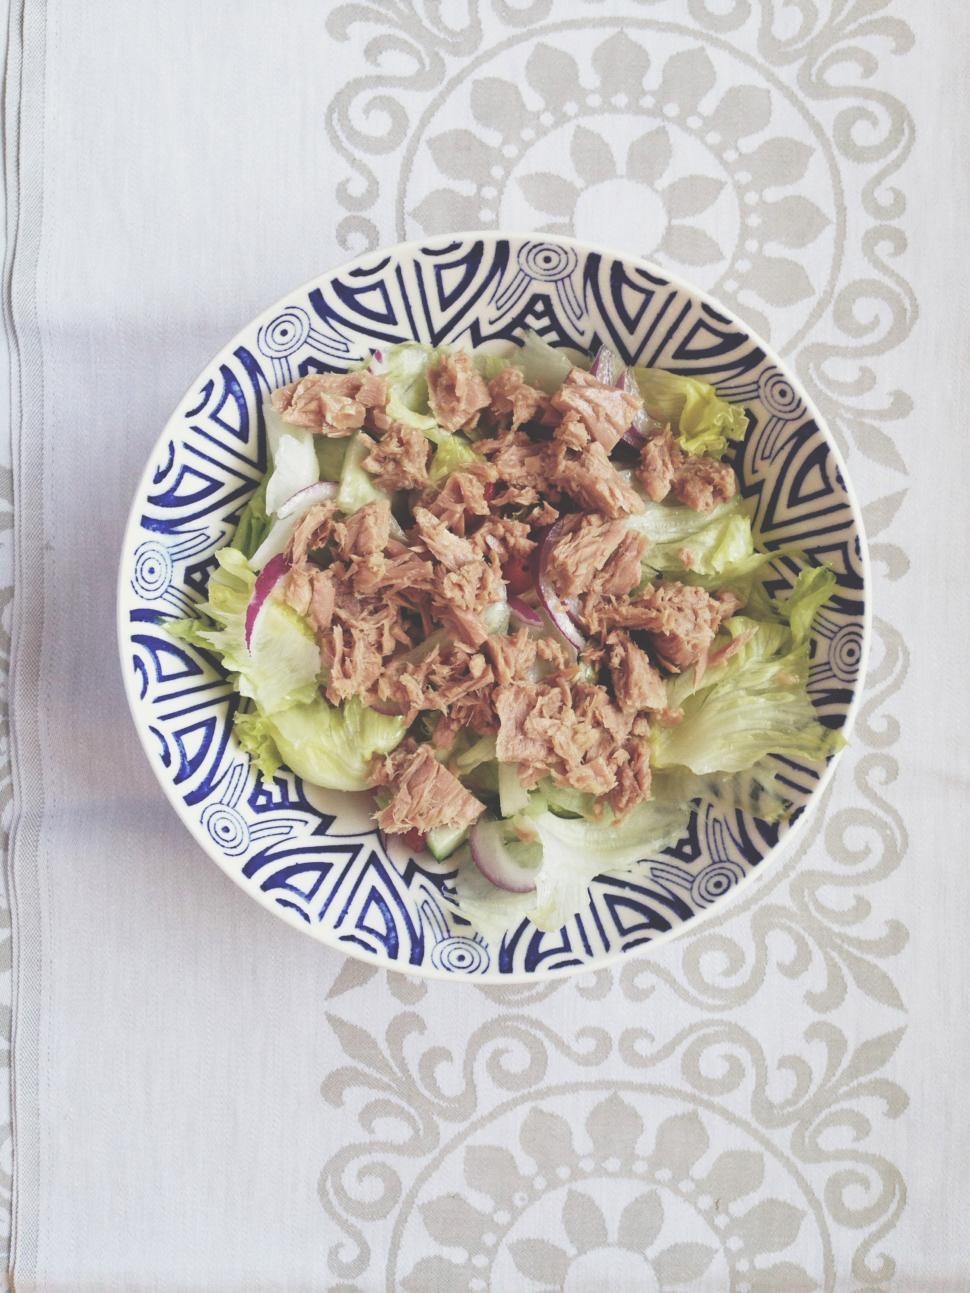 Free Image of Tuna Salad 